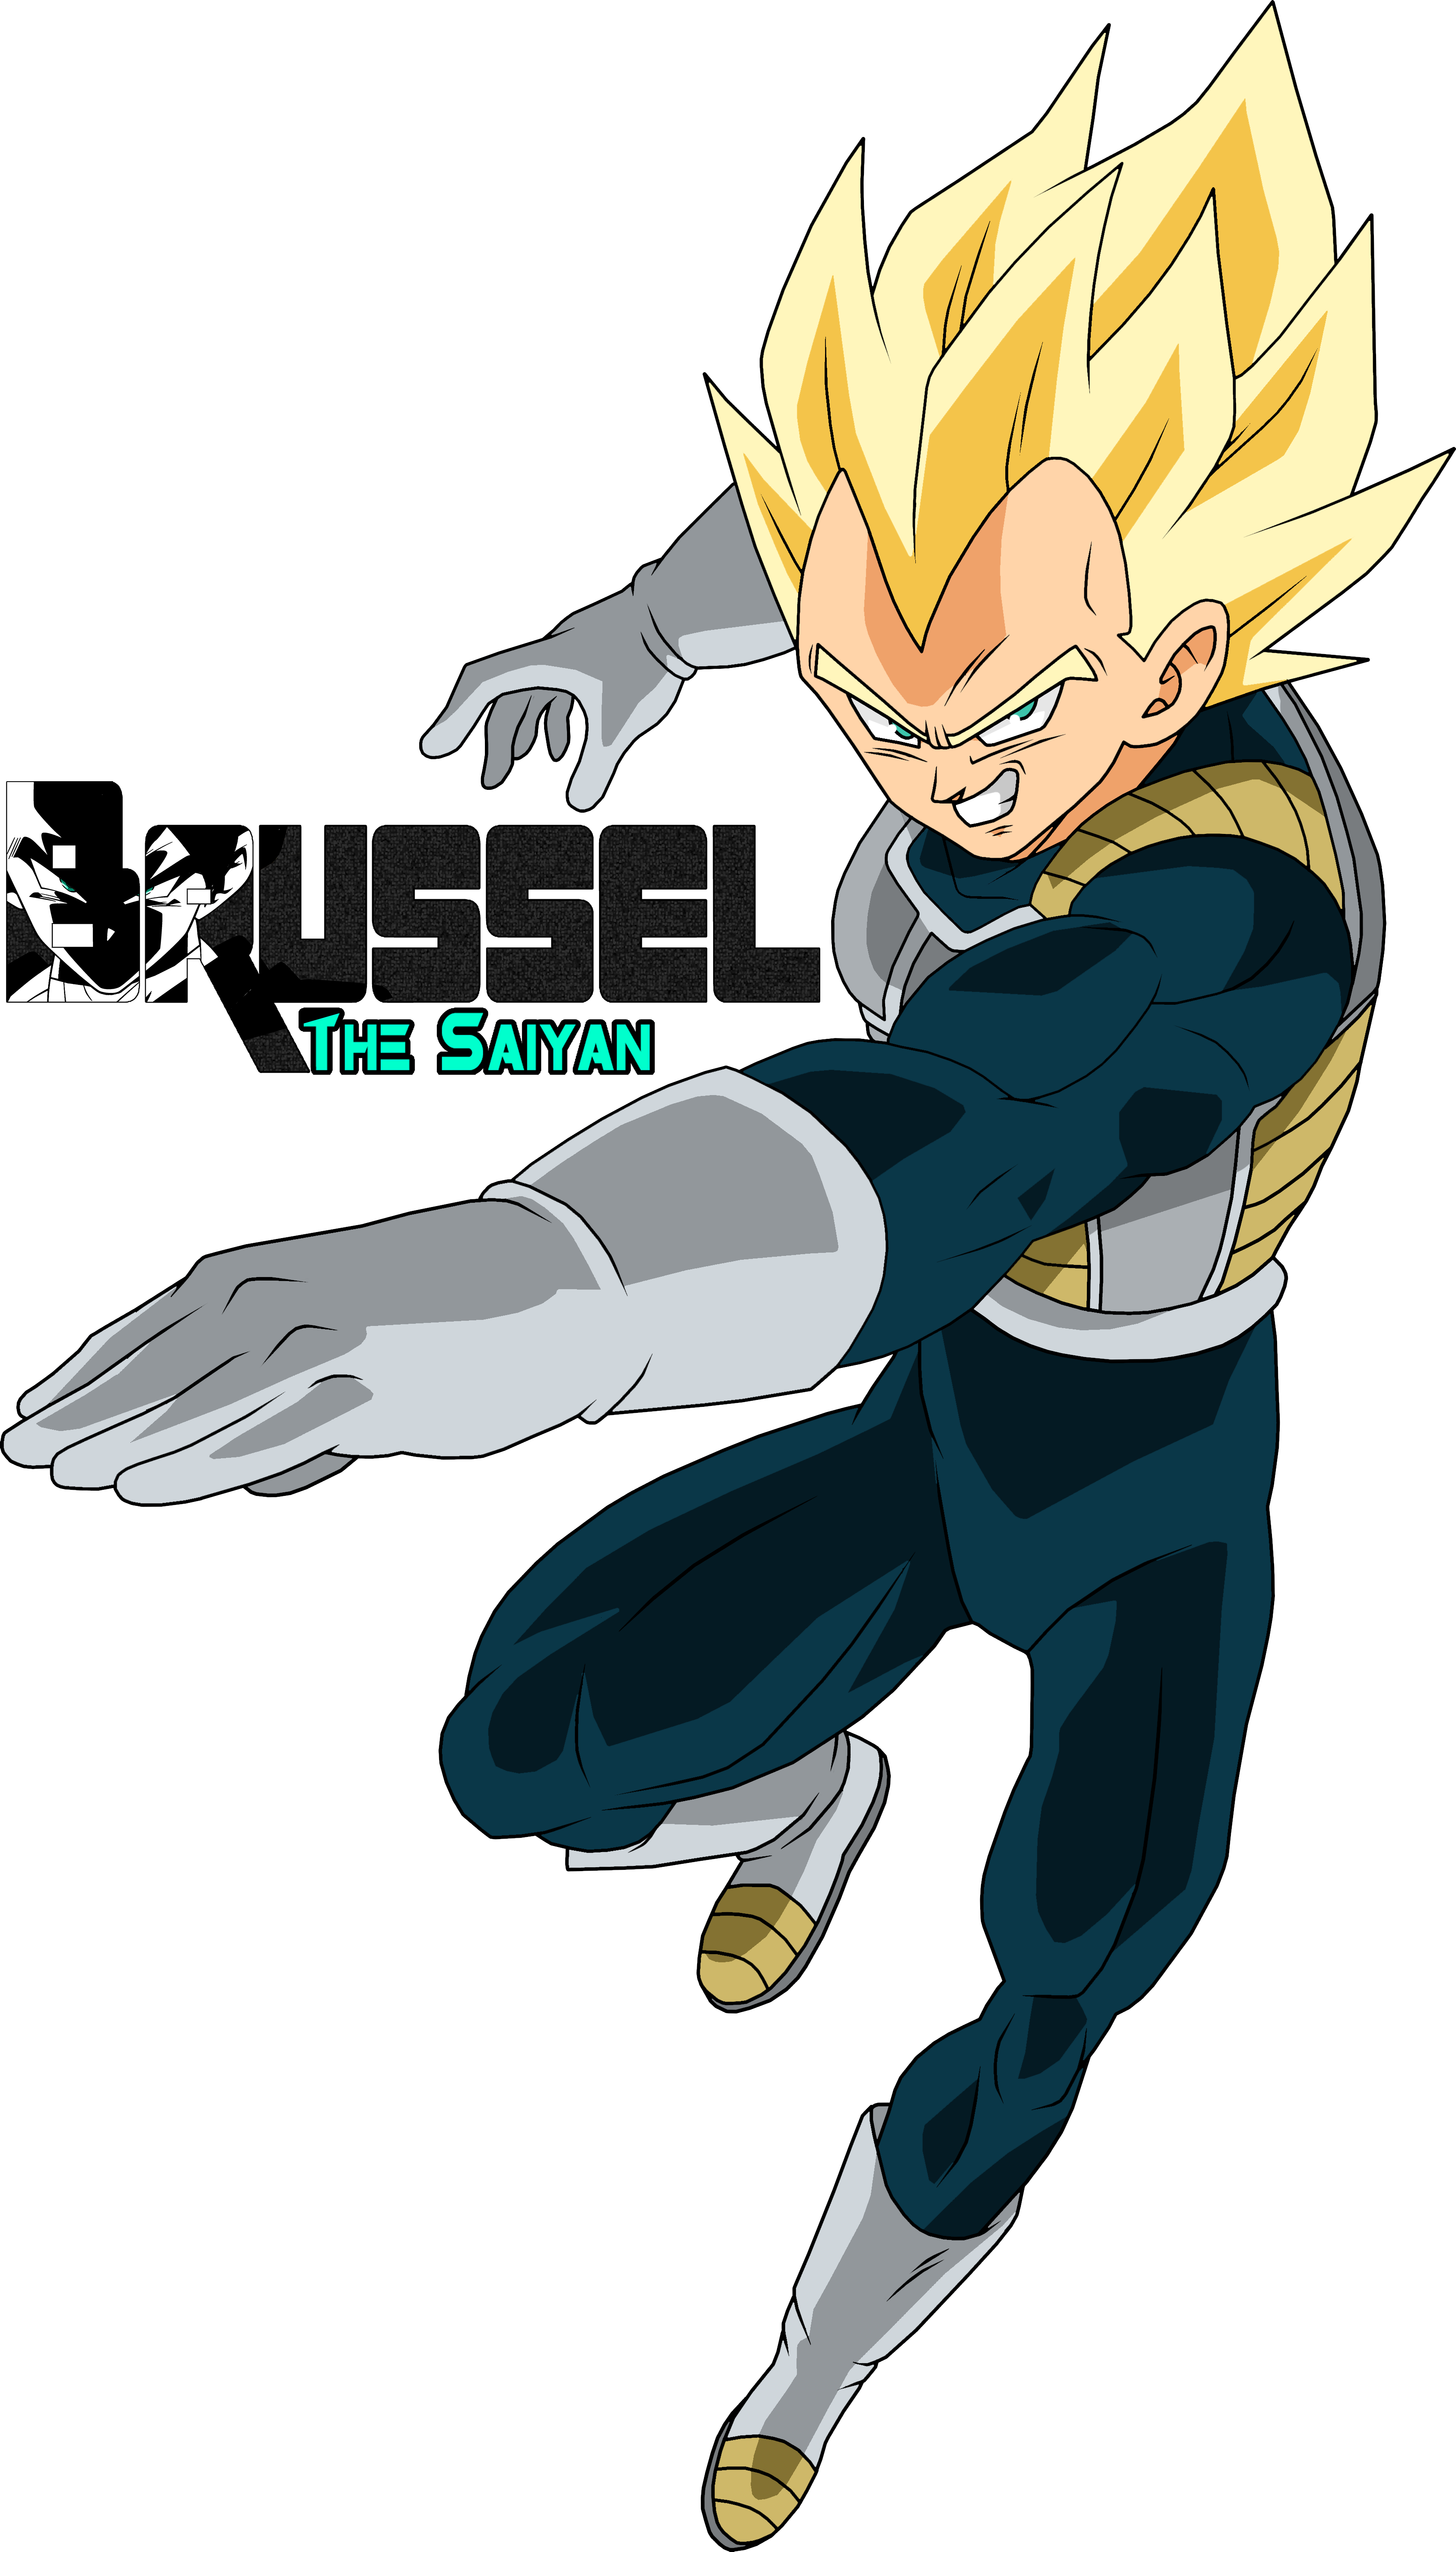 Super Saiyan 2 Vegeta Render by GokuisOverRated on DeviantArt